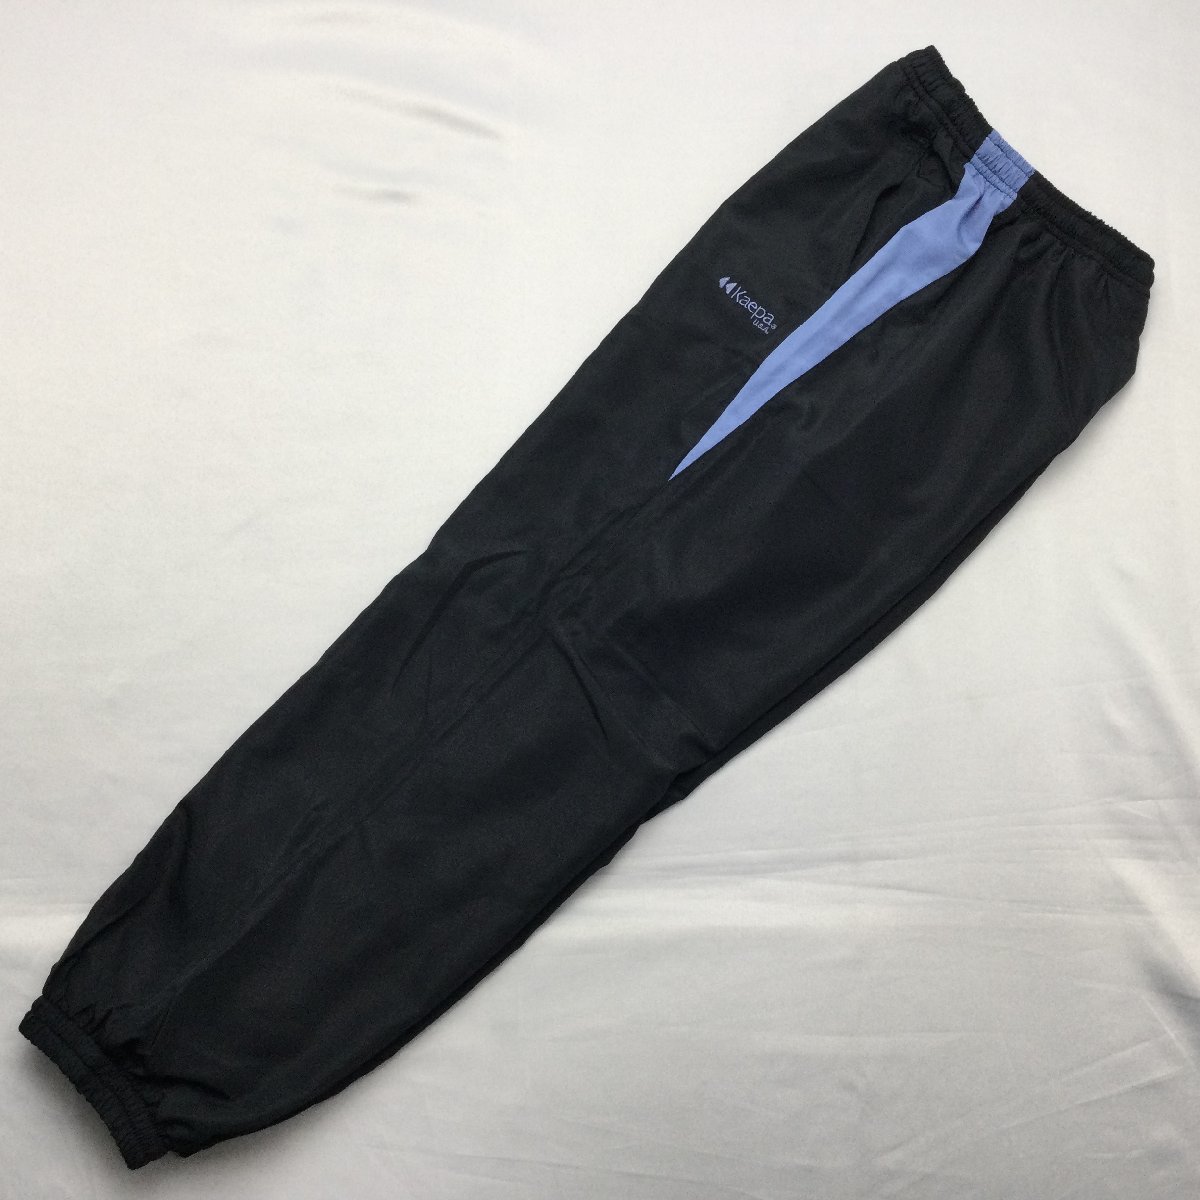 [ бесплатная доставка ][ новый товар ]Kaepa женский брейкер брюки ( с изнанки флис водоотталкивающая отделка UV cut кромка резина ) LL 2L BK*SX*473534